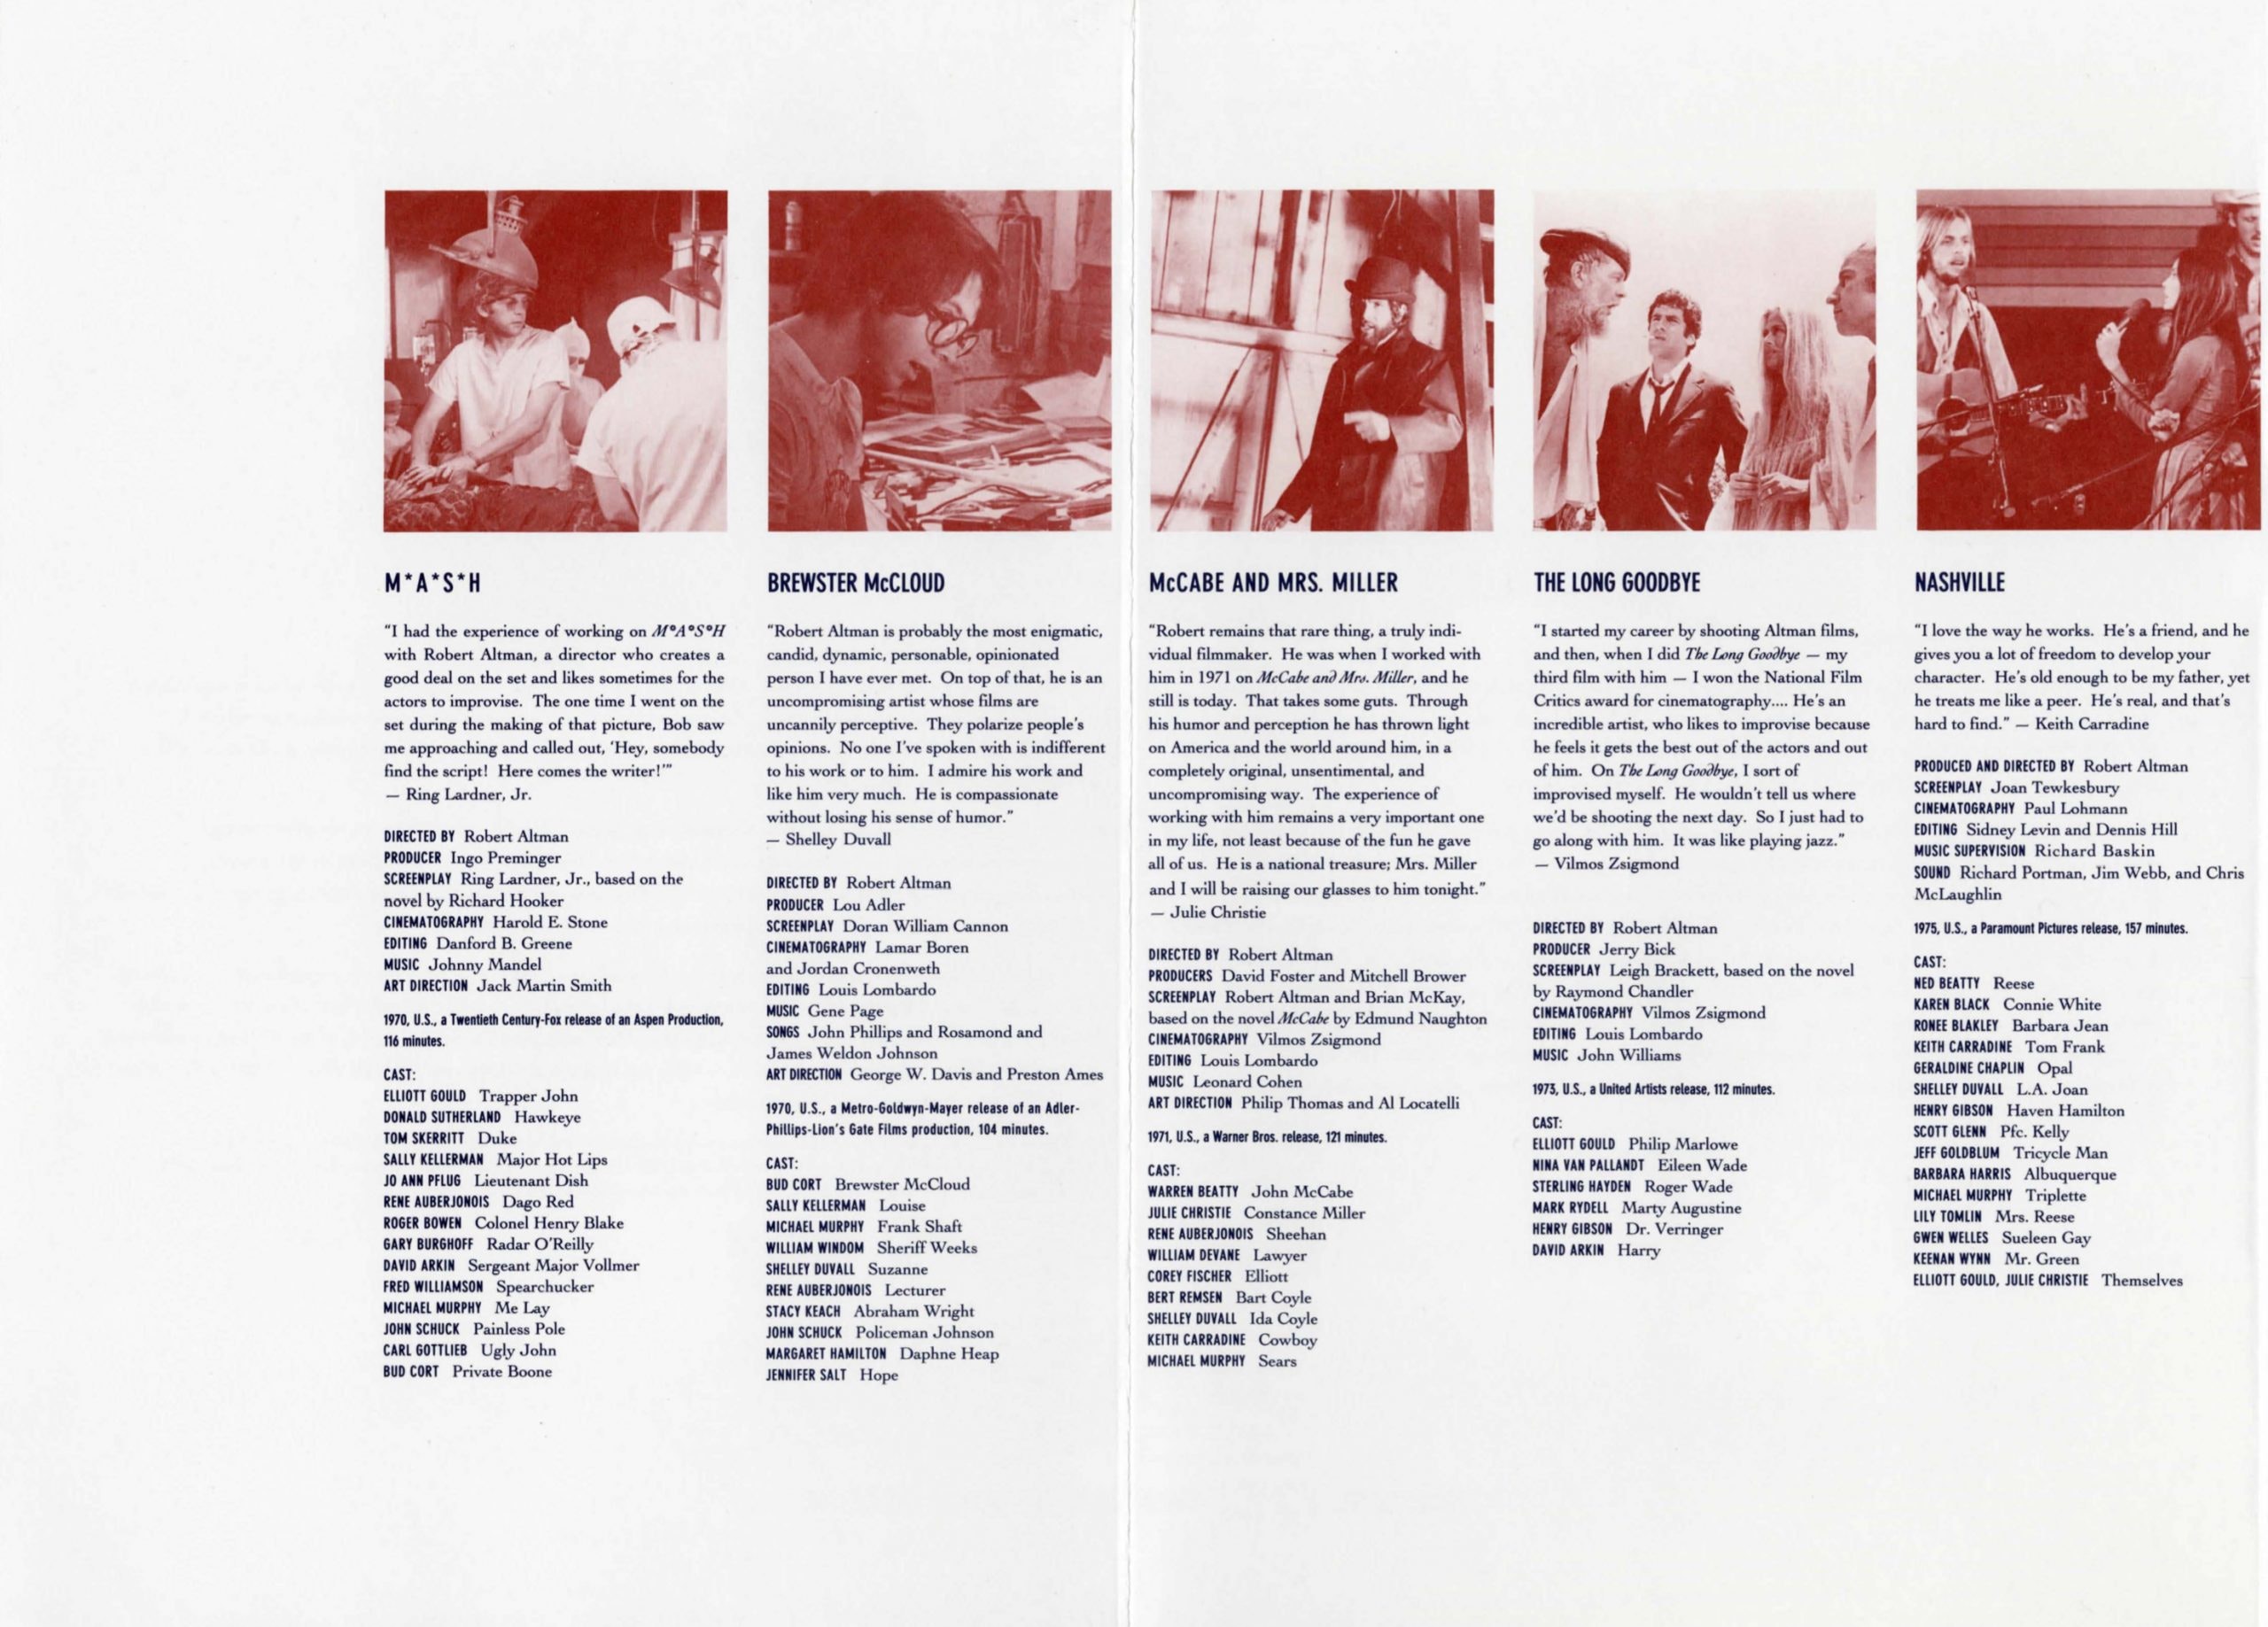 Robert Altman Dialogue event brochure page 3